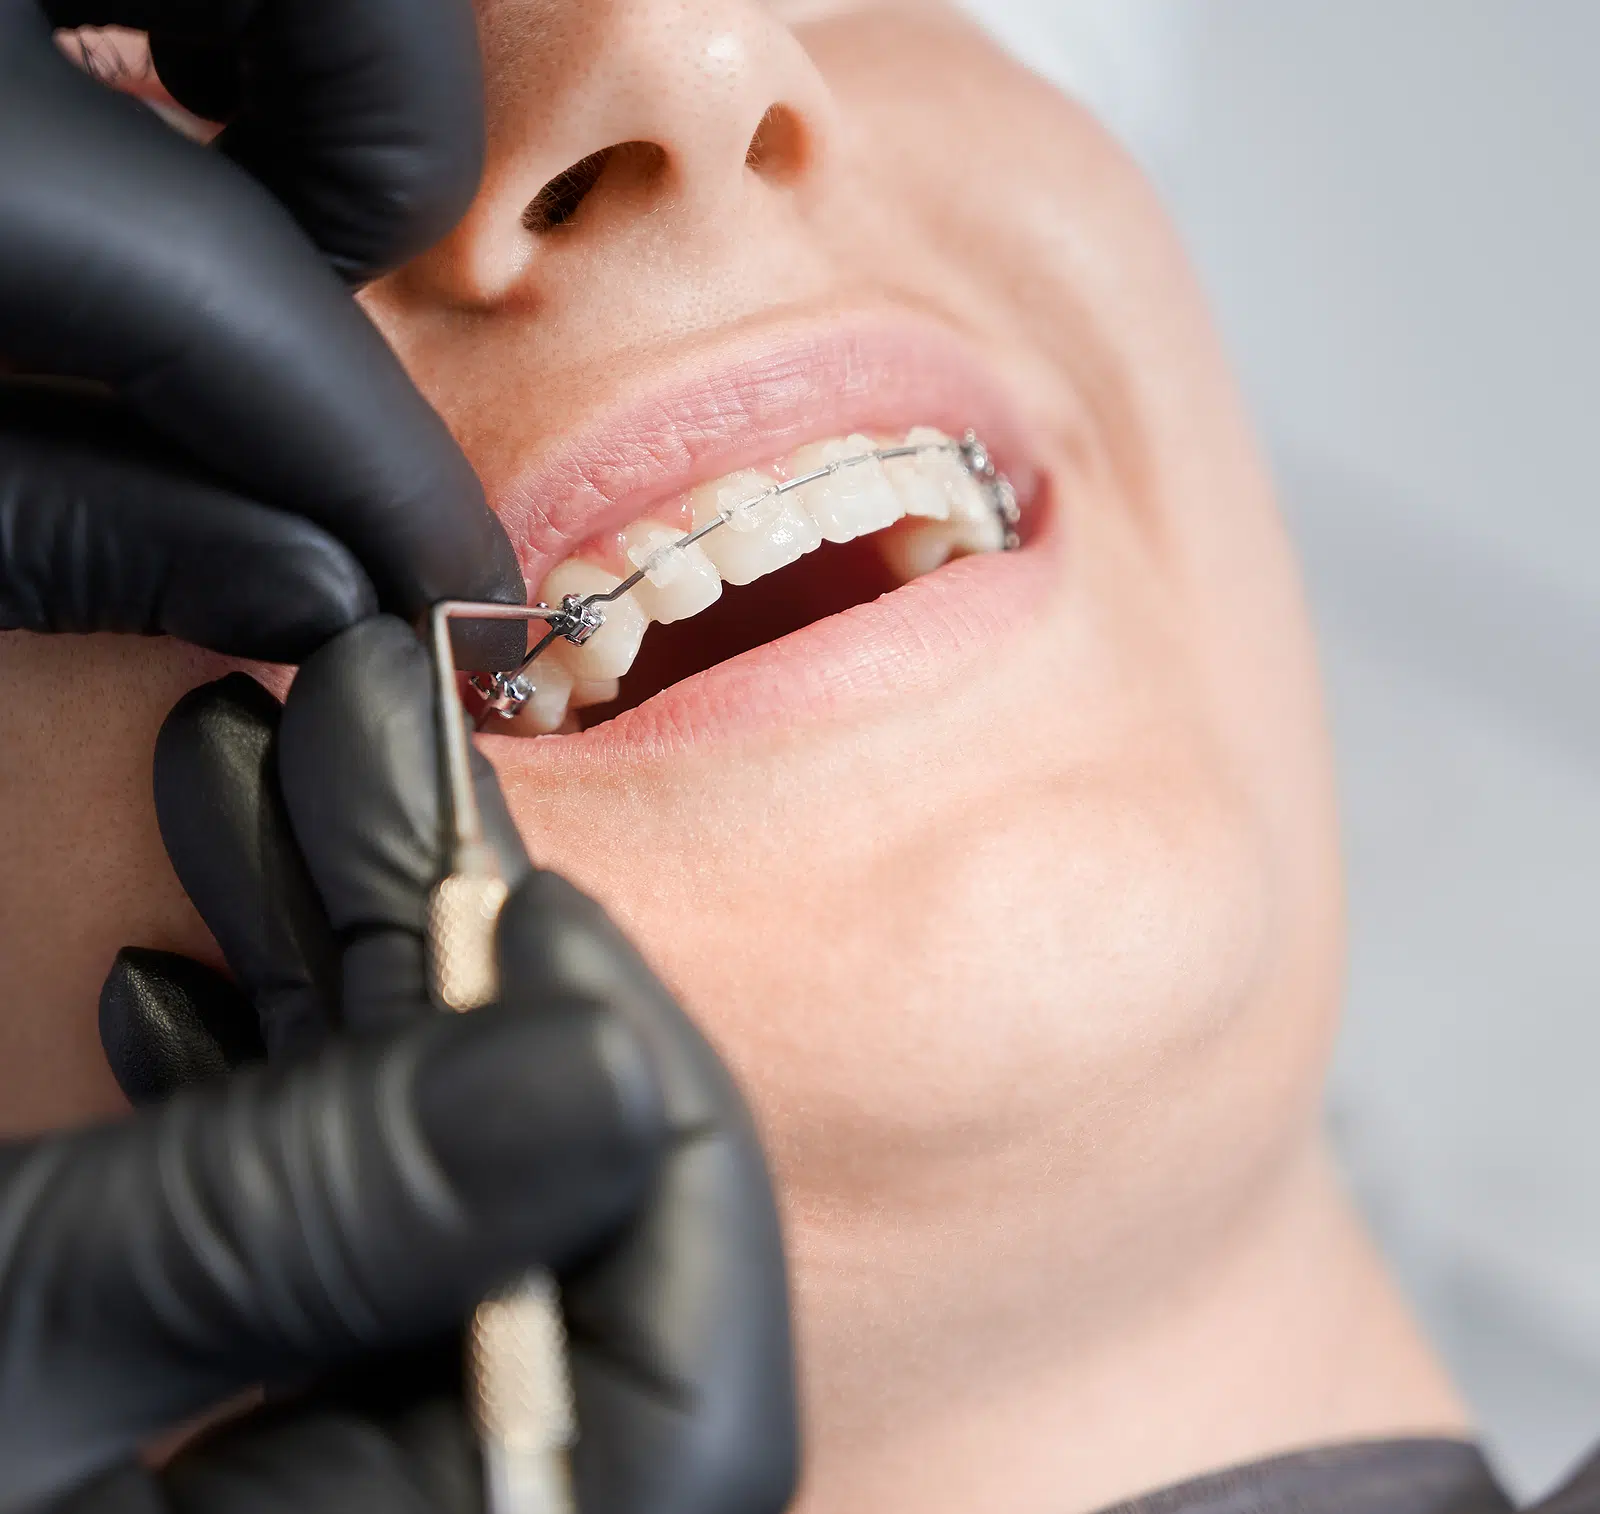 Dentists Vs. Orthodontists